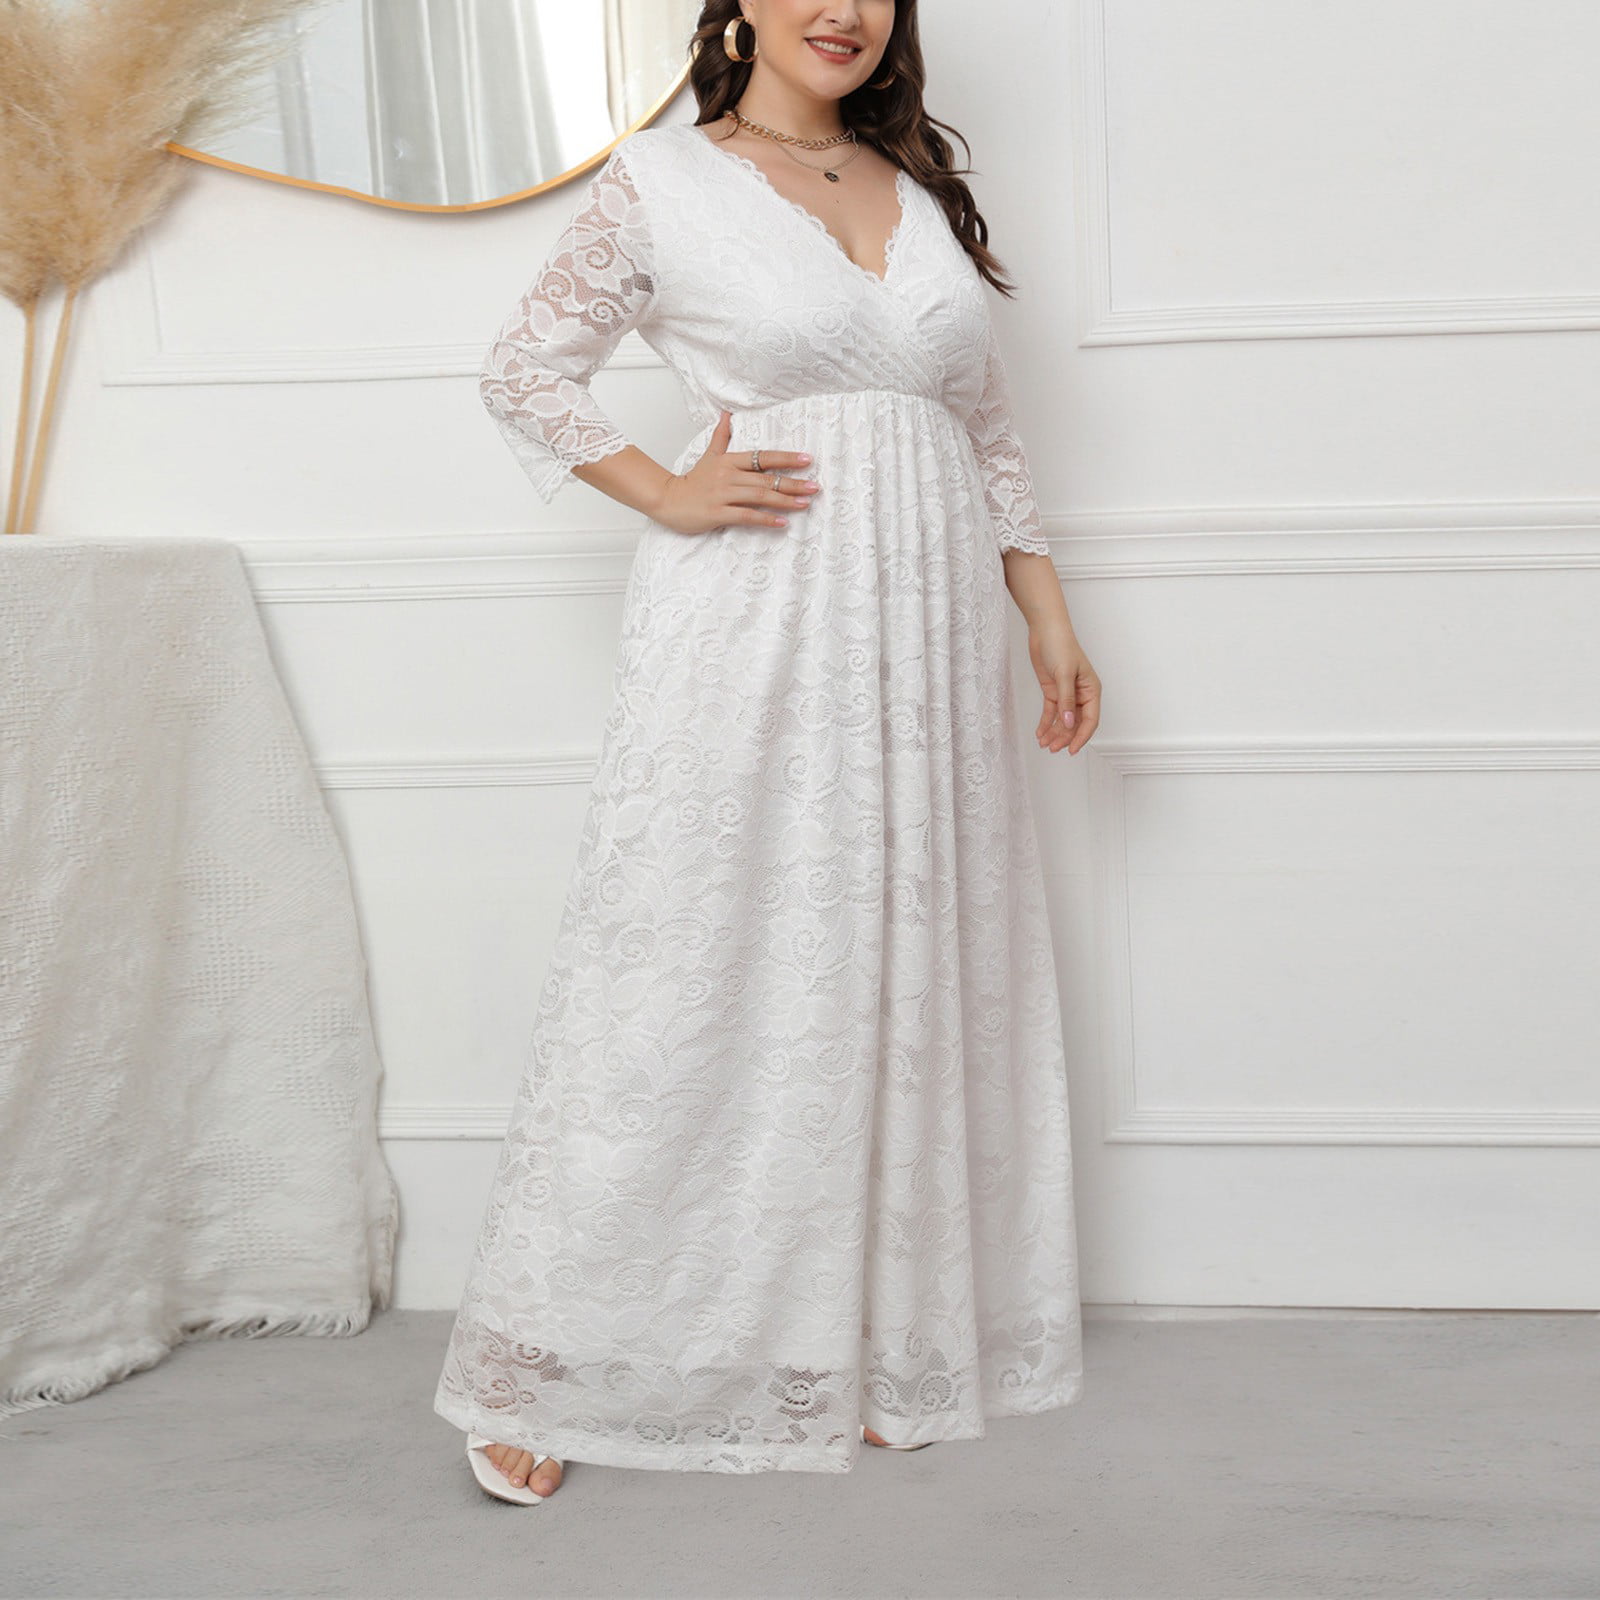 Elegant Lace Plus Size A-Line Wedding Dress with Off-the-Shoulder Sleeves -  Stella York Wedding Dresses